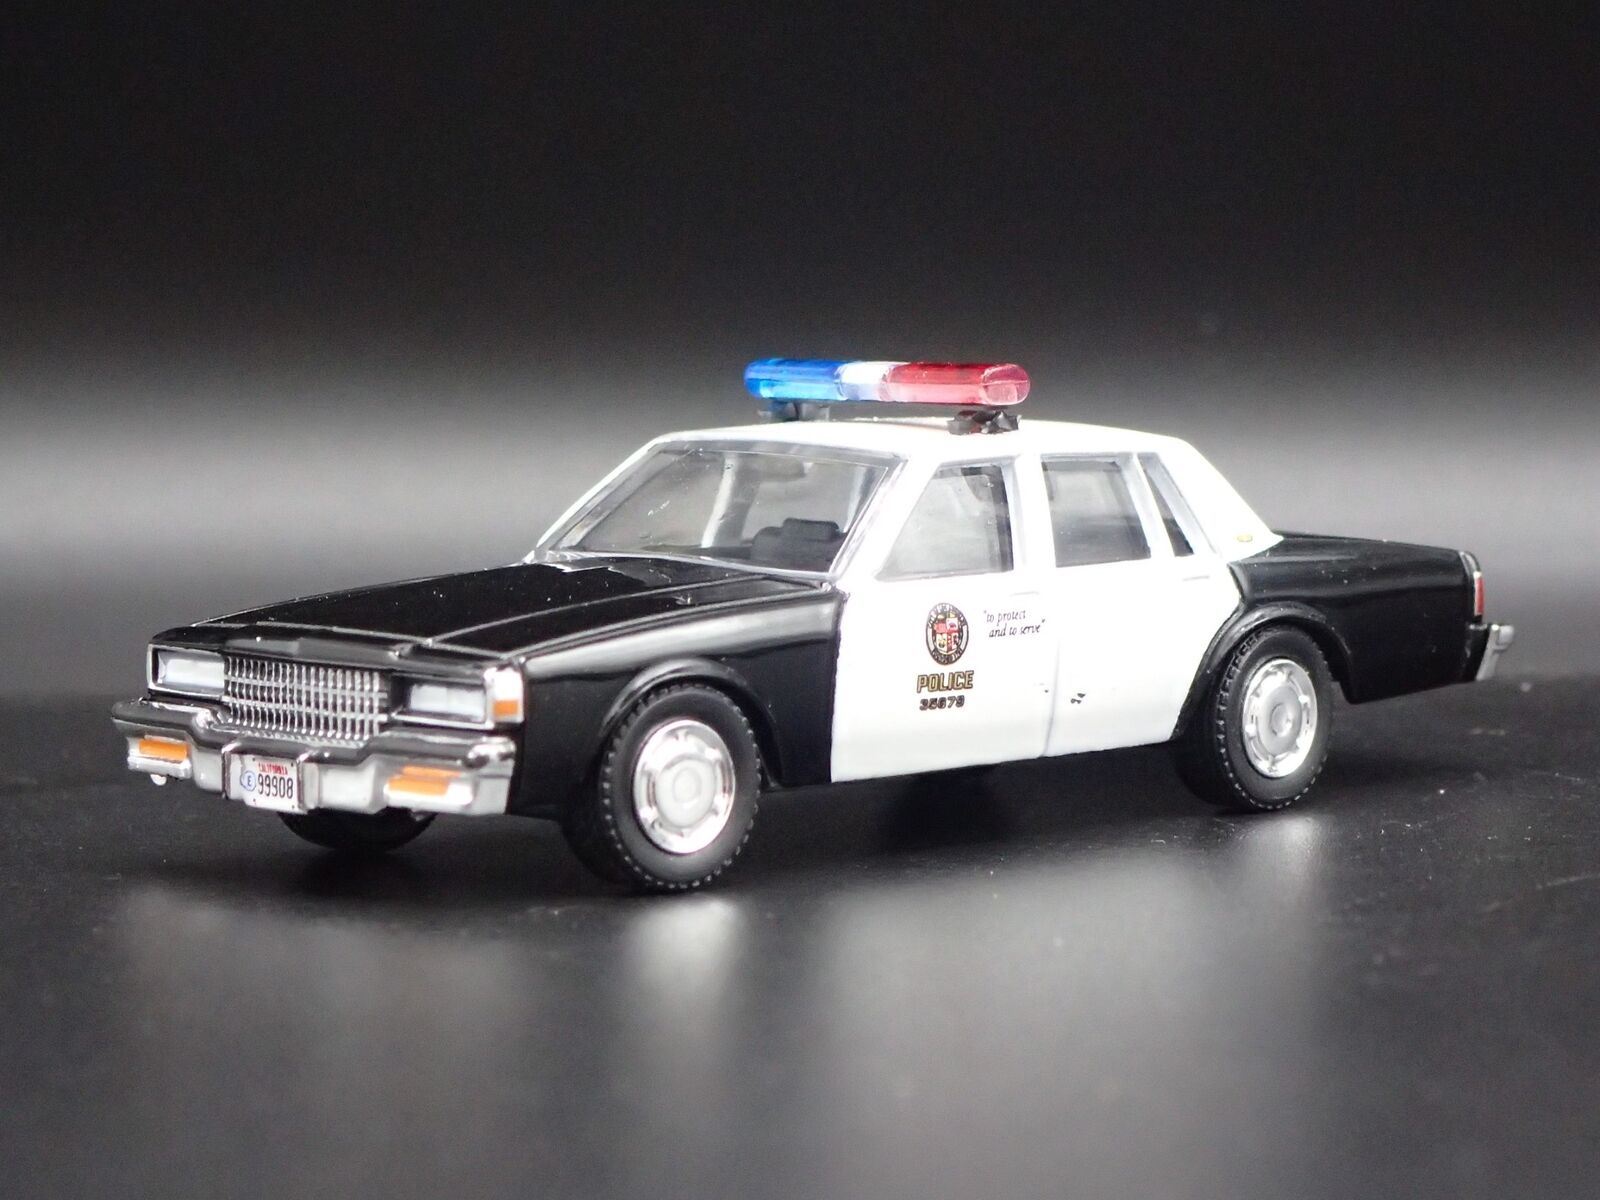 1987 87 CHEVY CHEVROLET CAPRICE LAPD, CA 1/64 SCALE DIORAMA DIECAST MODEL CAR